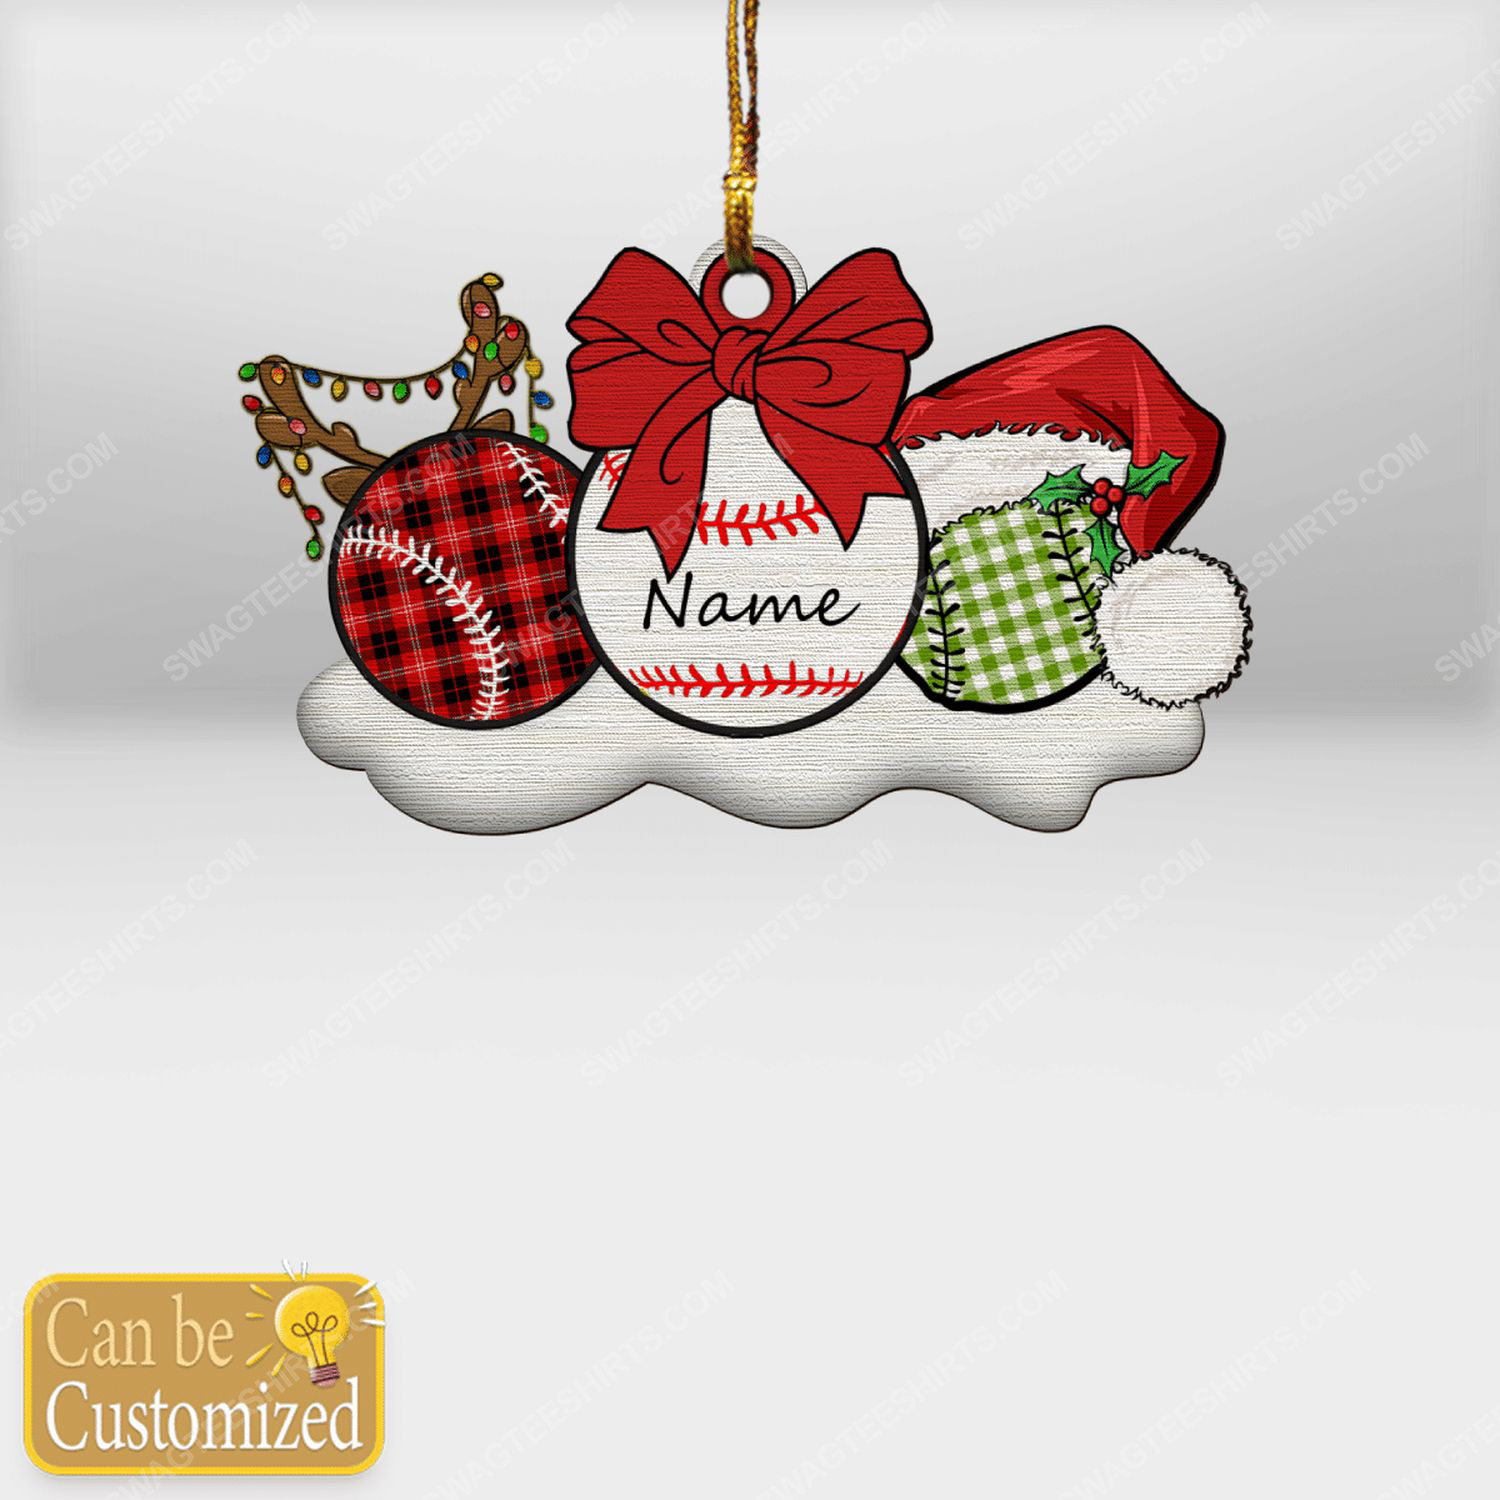 Custom baseball ball christmas gift ornament 1 - Copy (2)